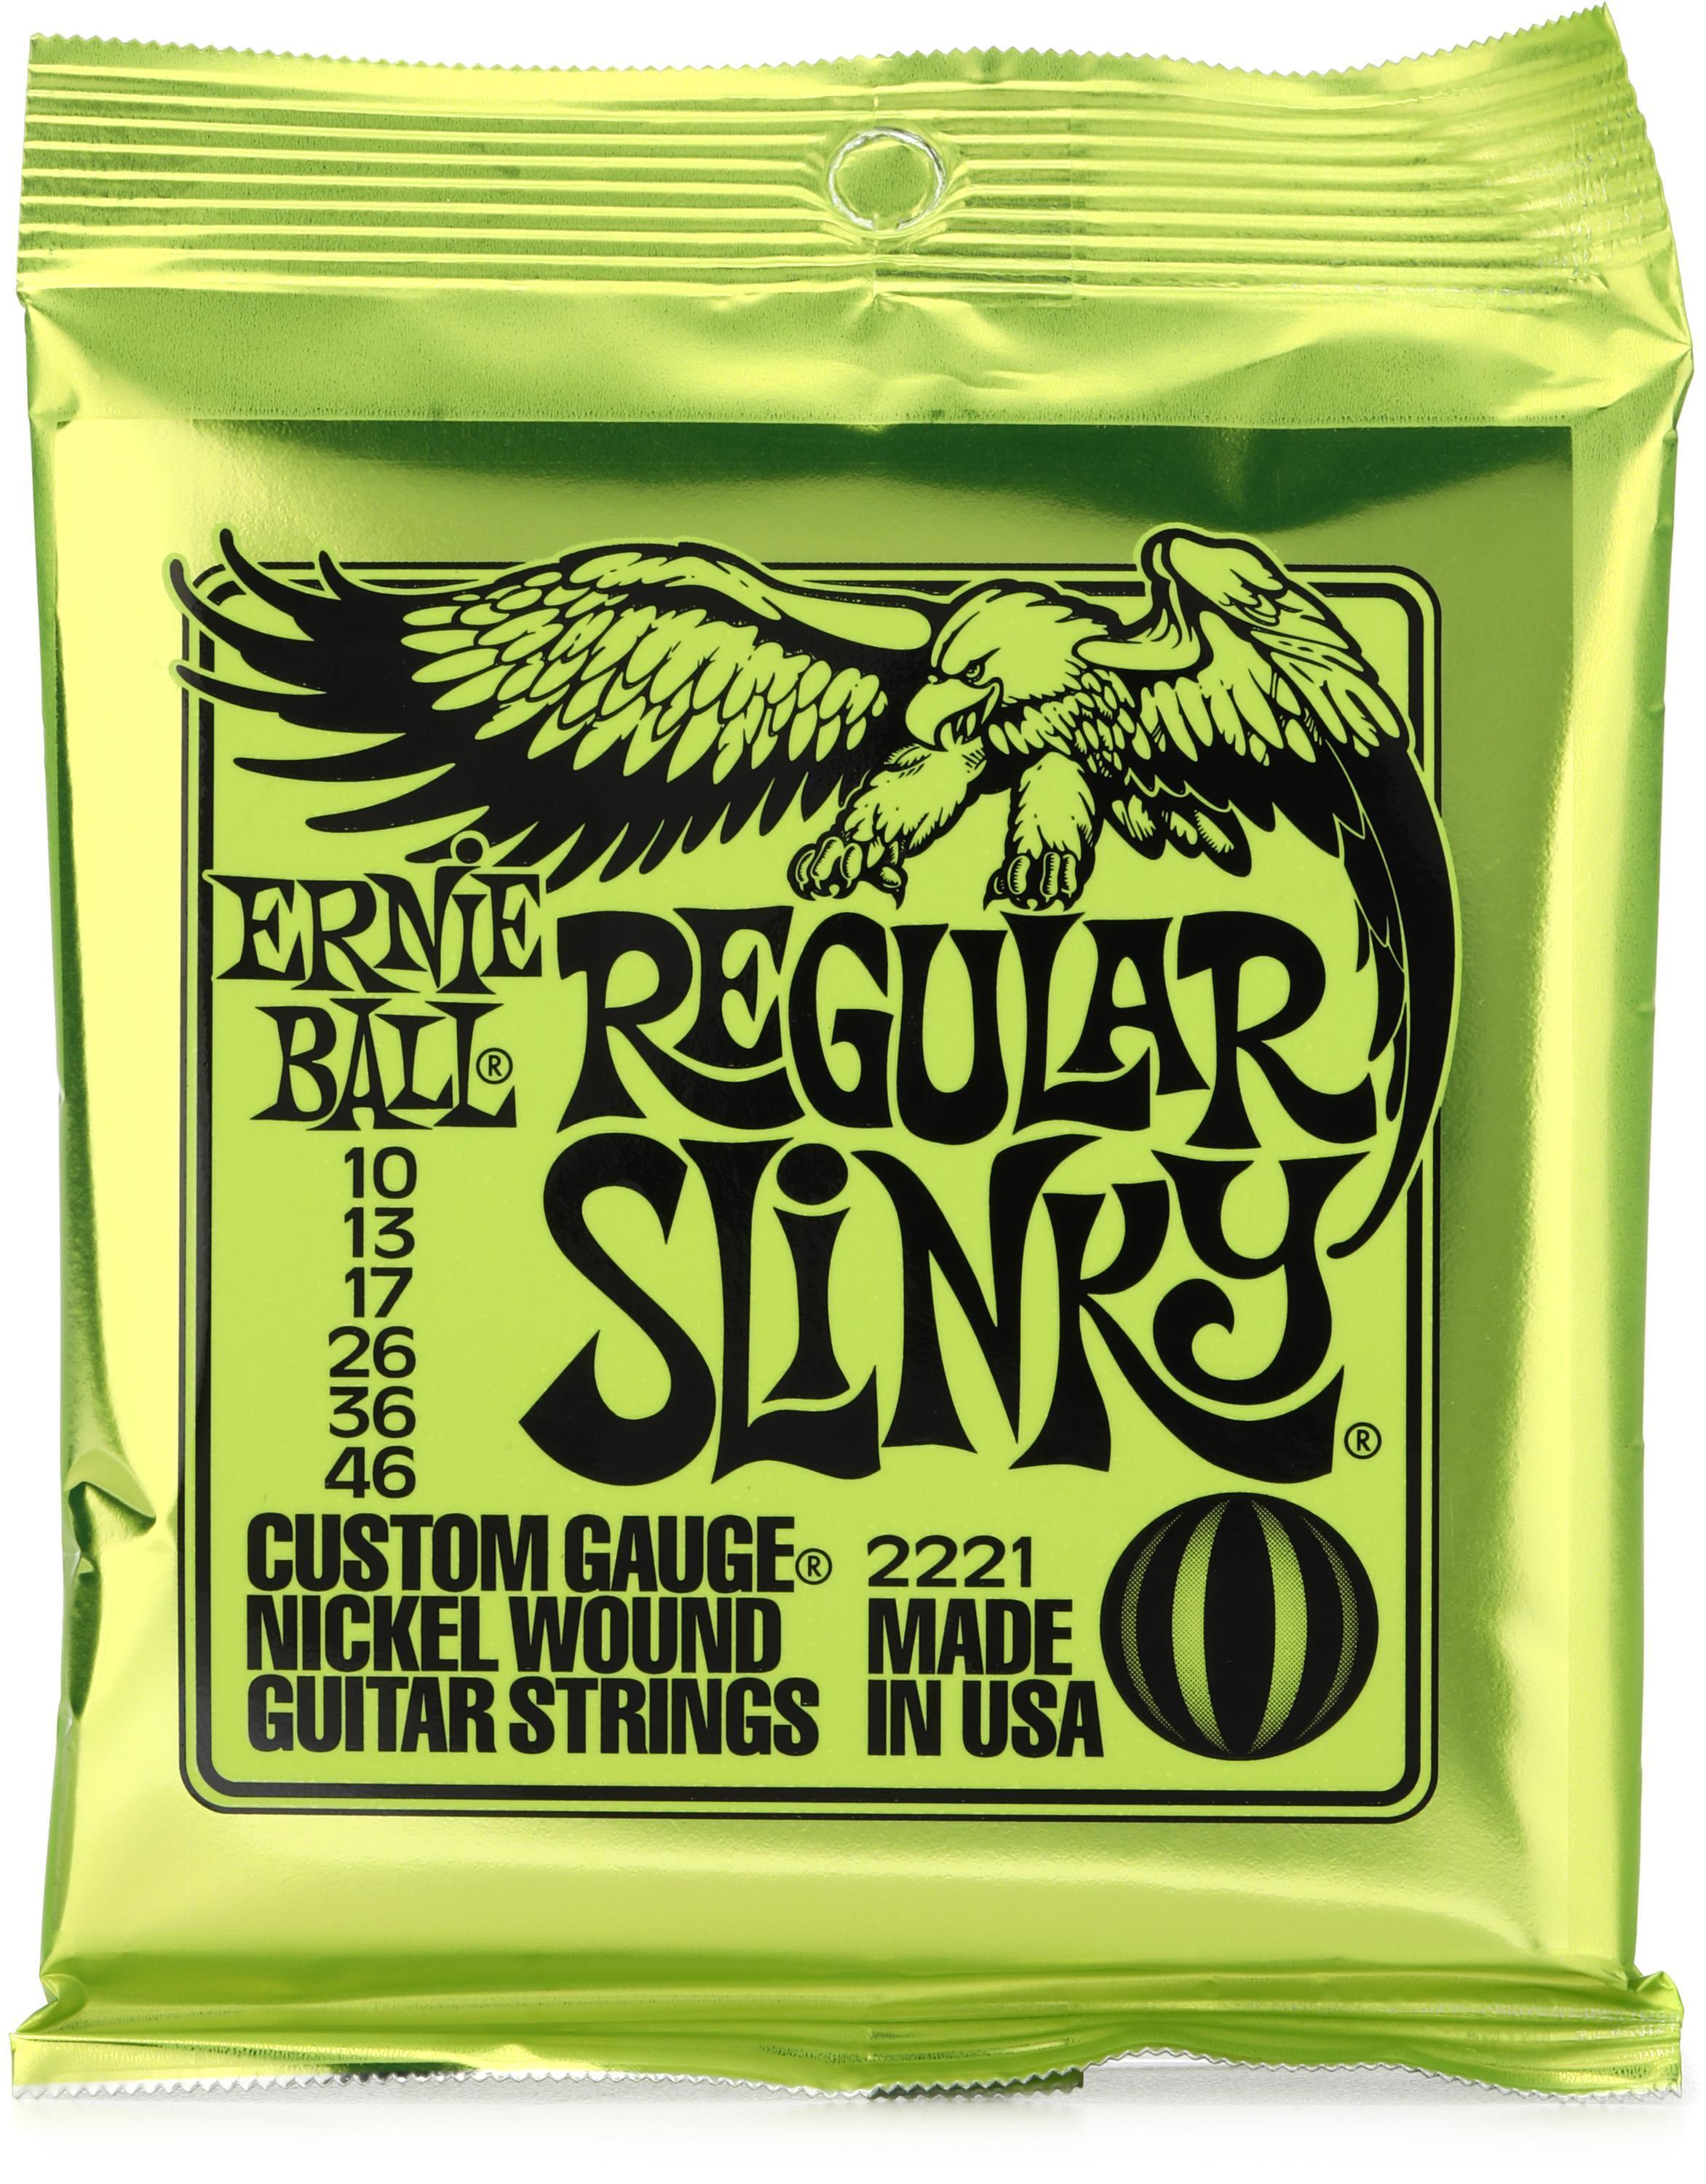 Ernie Ball Regular Slinky Electric Guitar Strings (10-46) 3 Pack